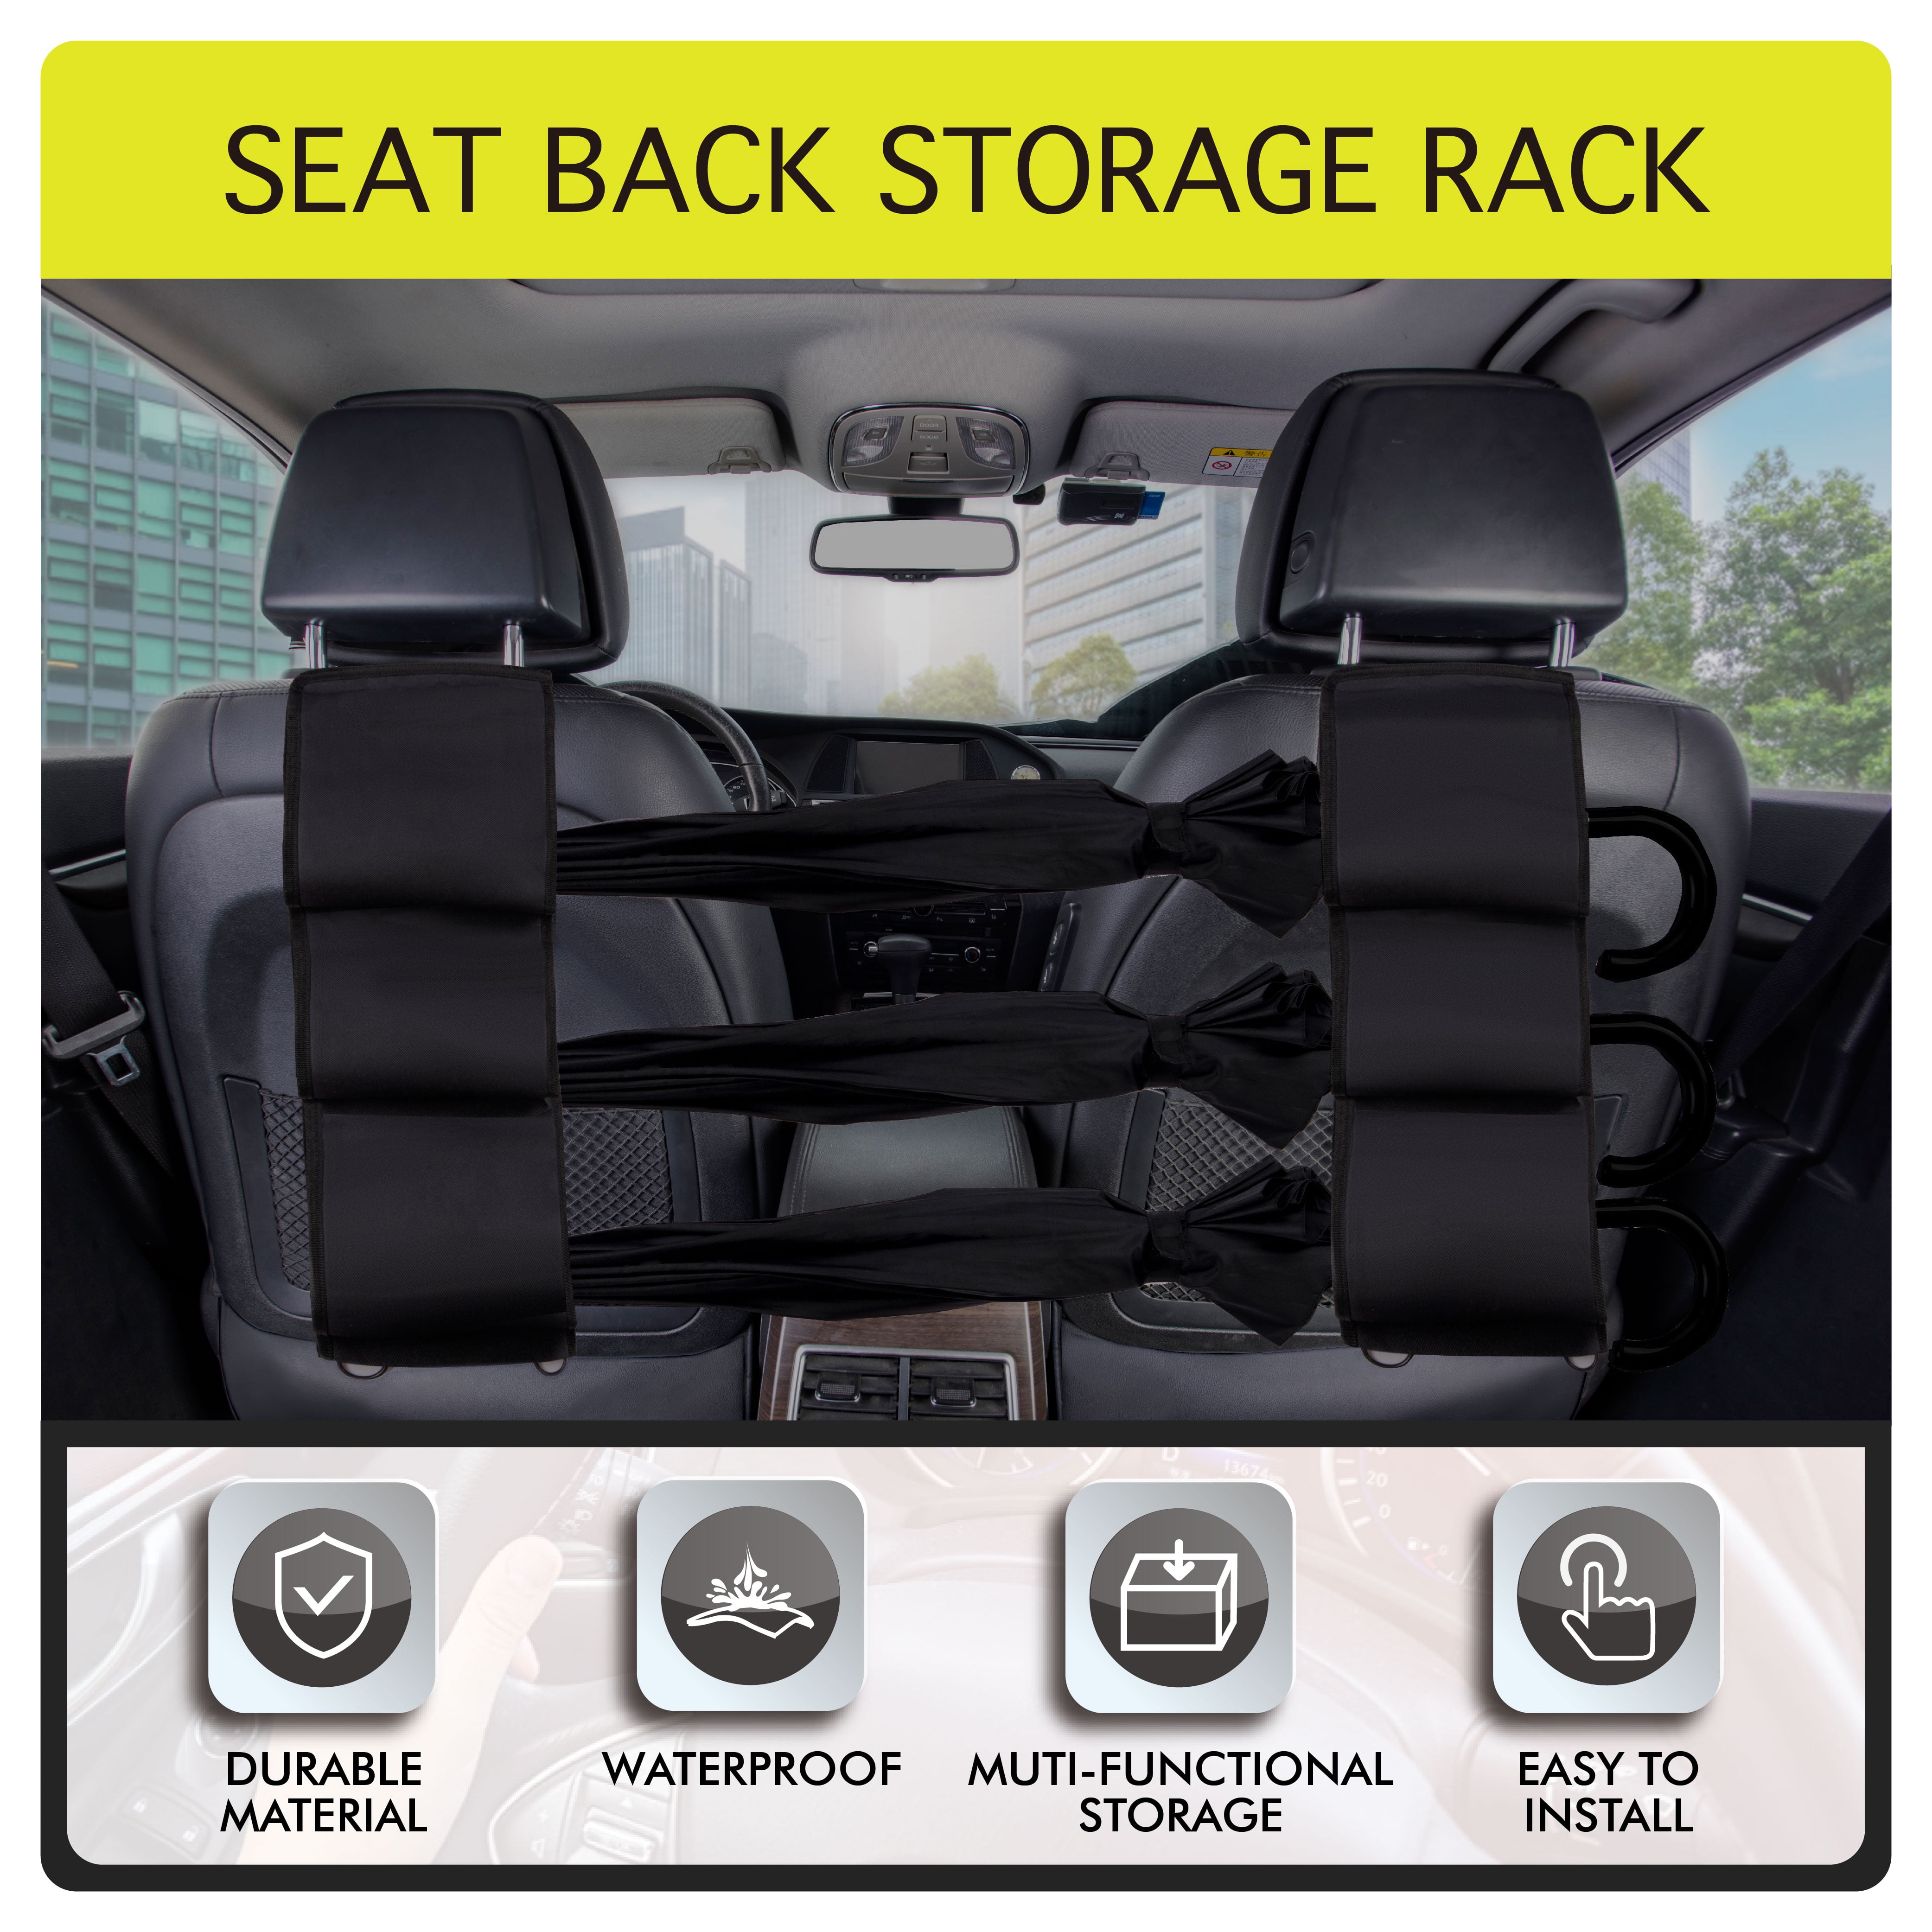 Auto Drive Car Accessories: 2-Pack Backseat Organizer Storage Rack $2.47 + Free S&H w/ Walmart+ or $35+